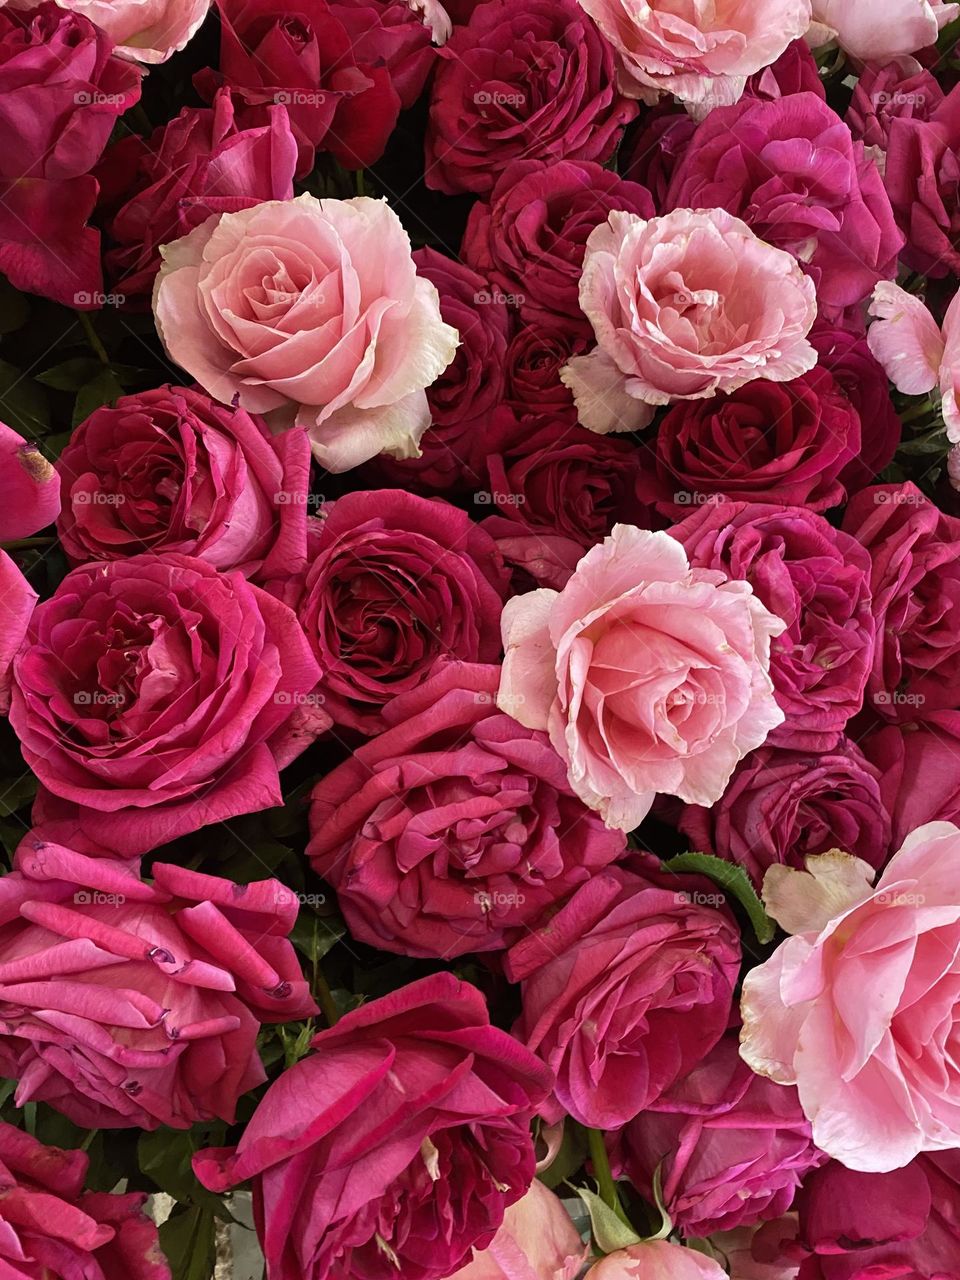 50 shades of pink roses